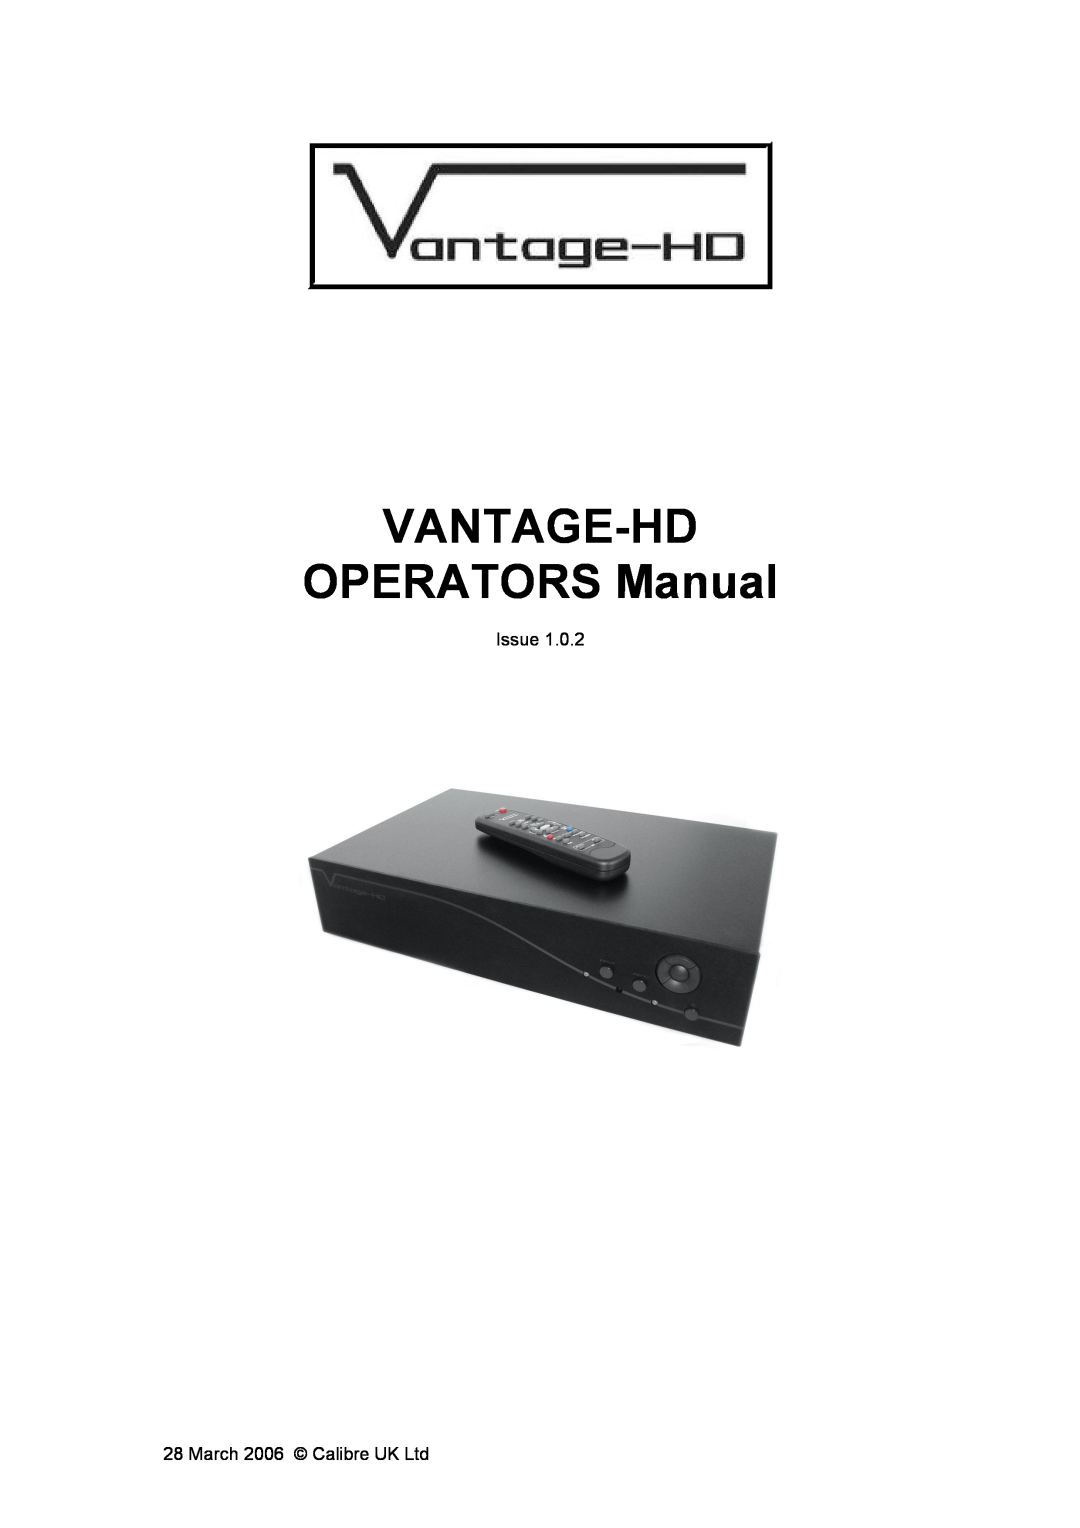 Calibre UK manual VANTAGE-HD OPERATORS Manual 